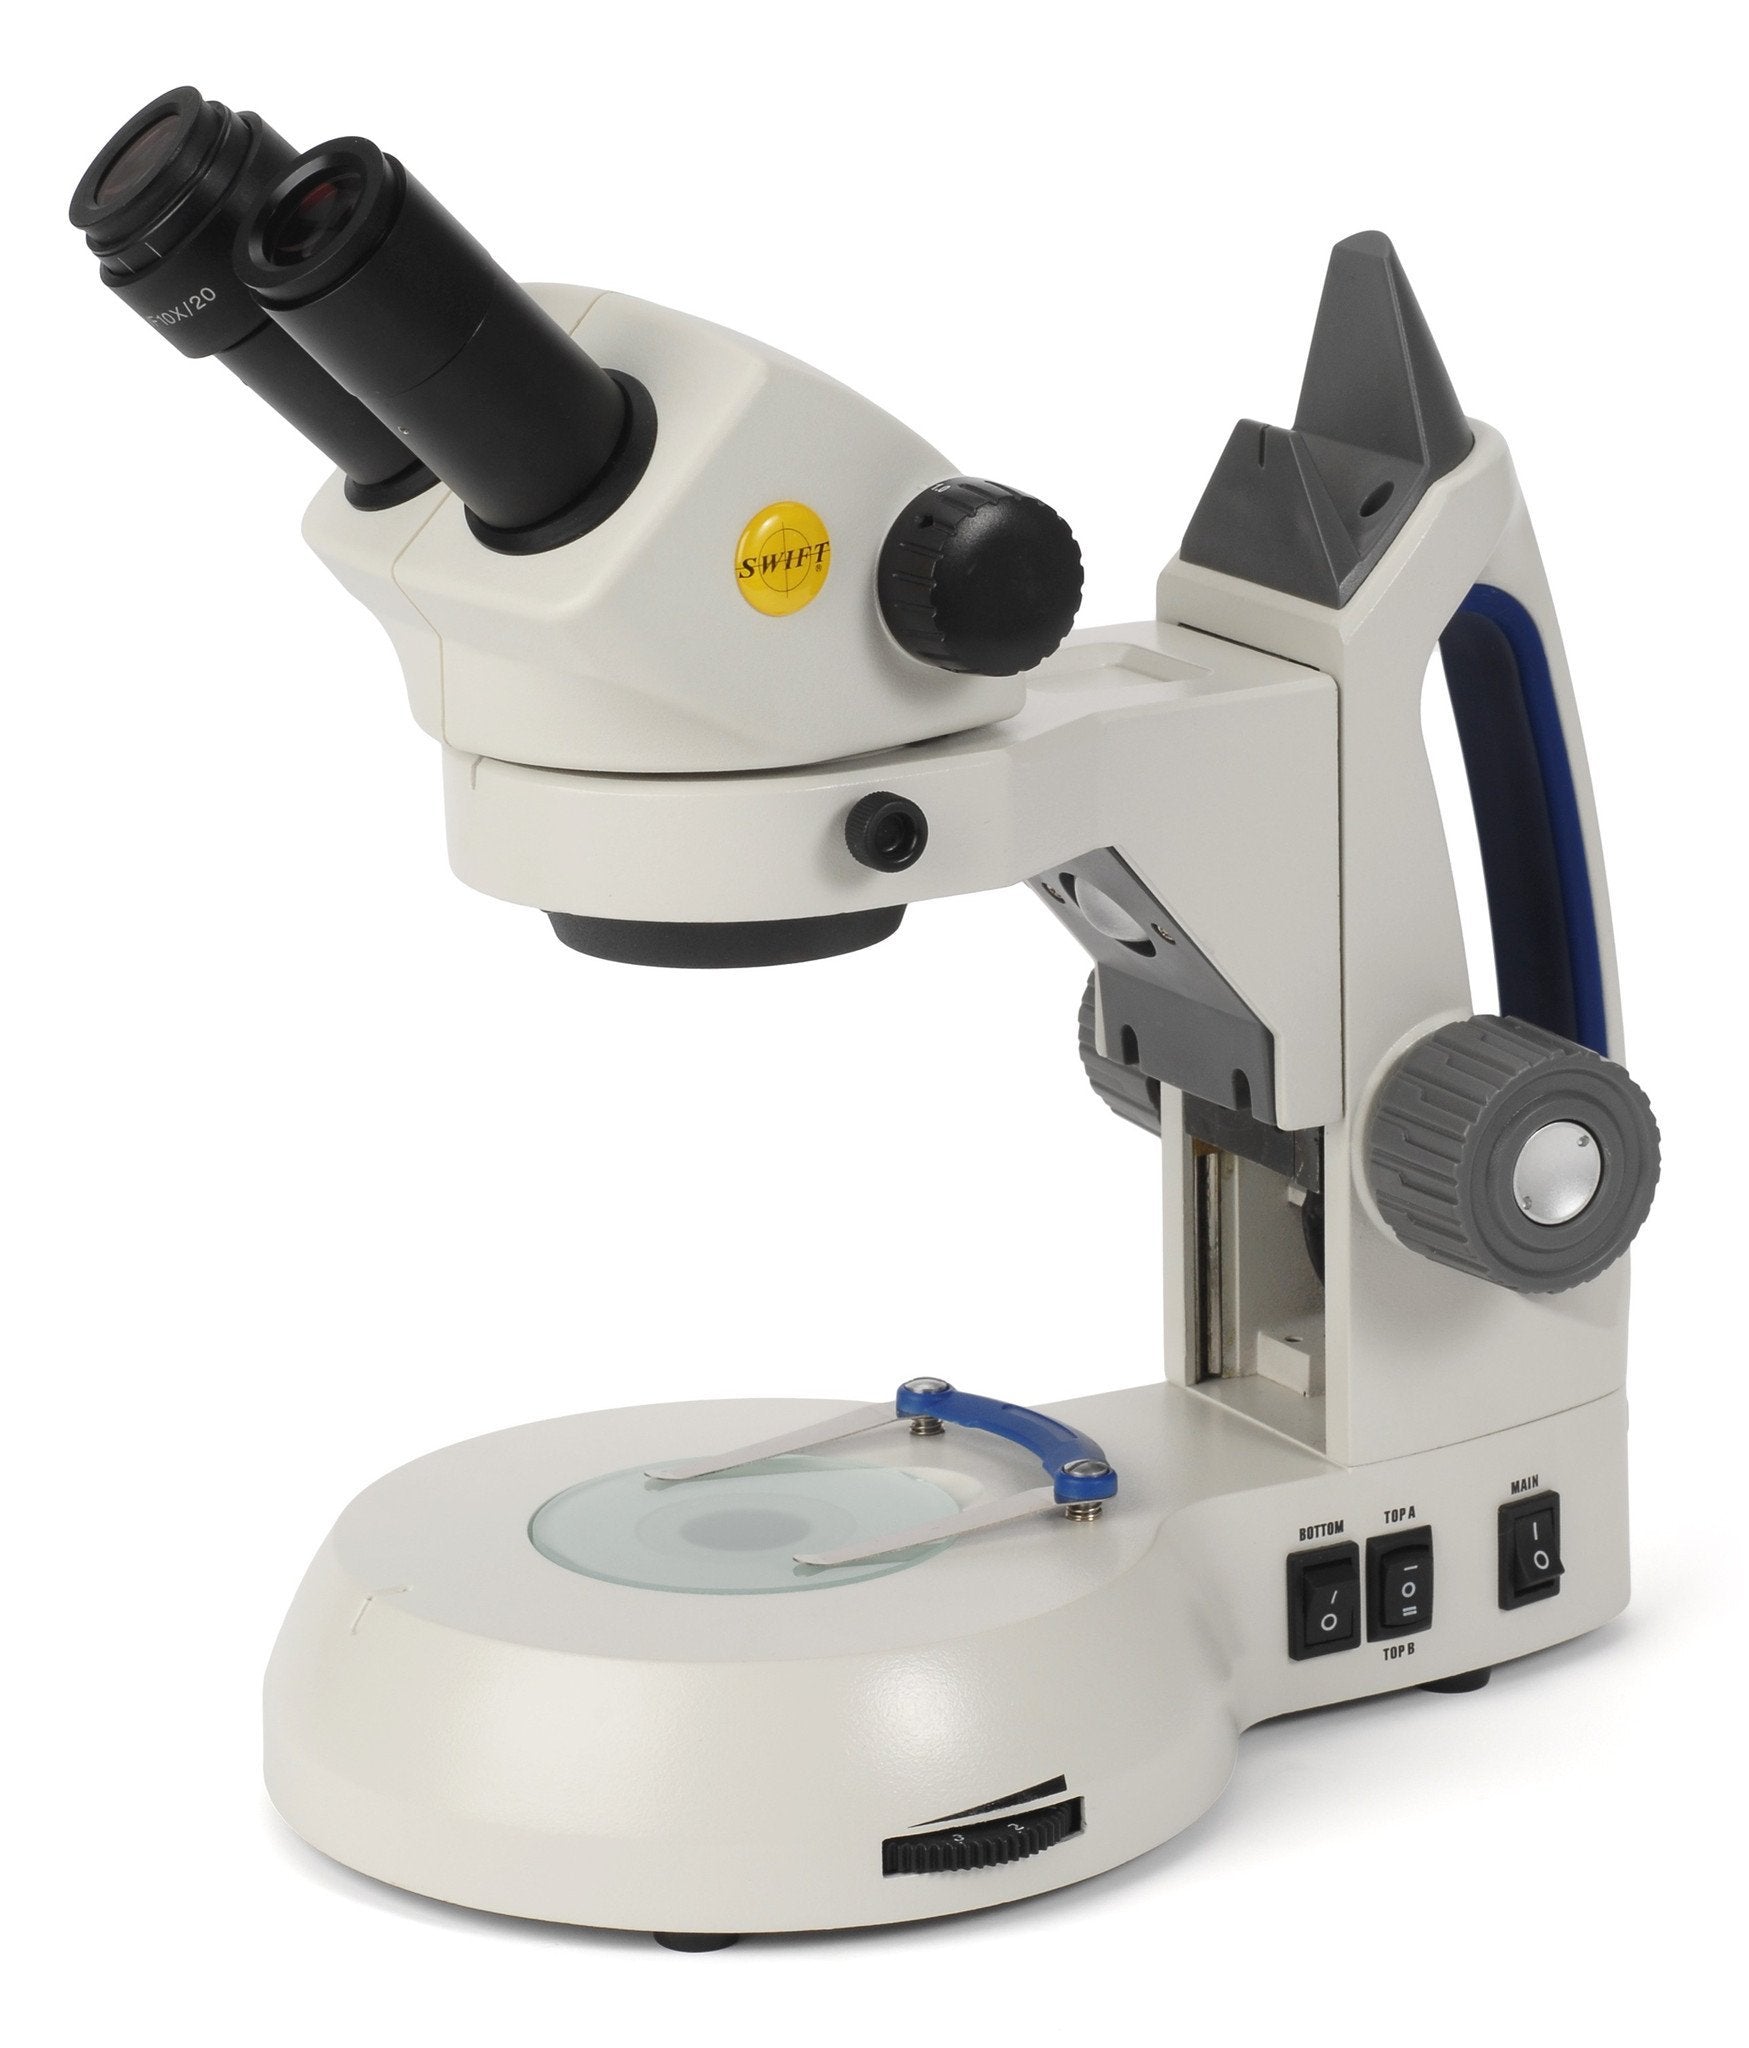 Swift SM105 10x-30x Zoom Stereo Microscope